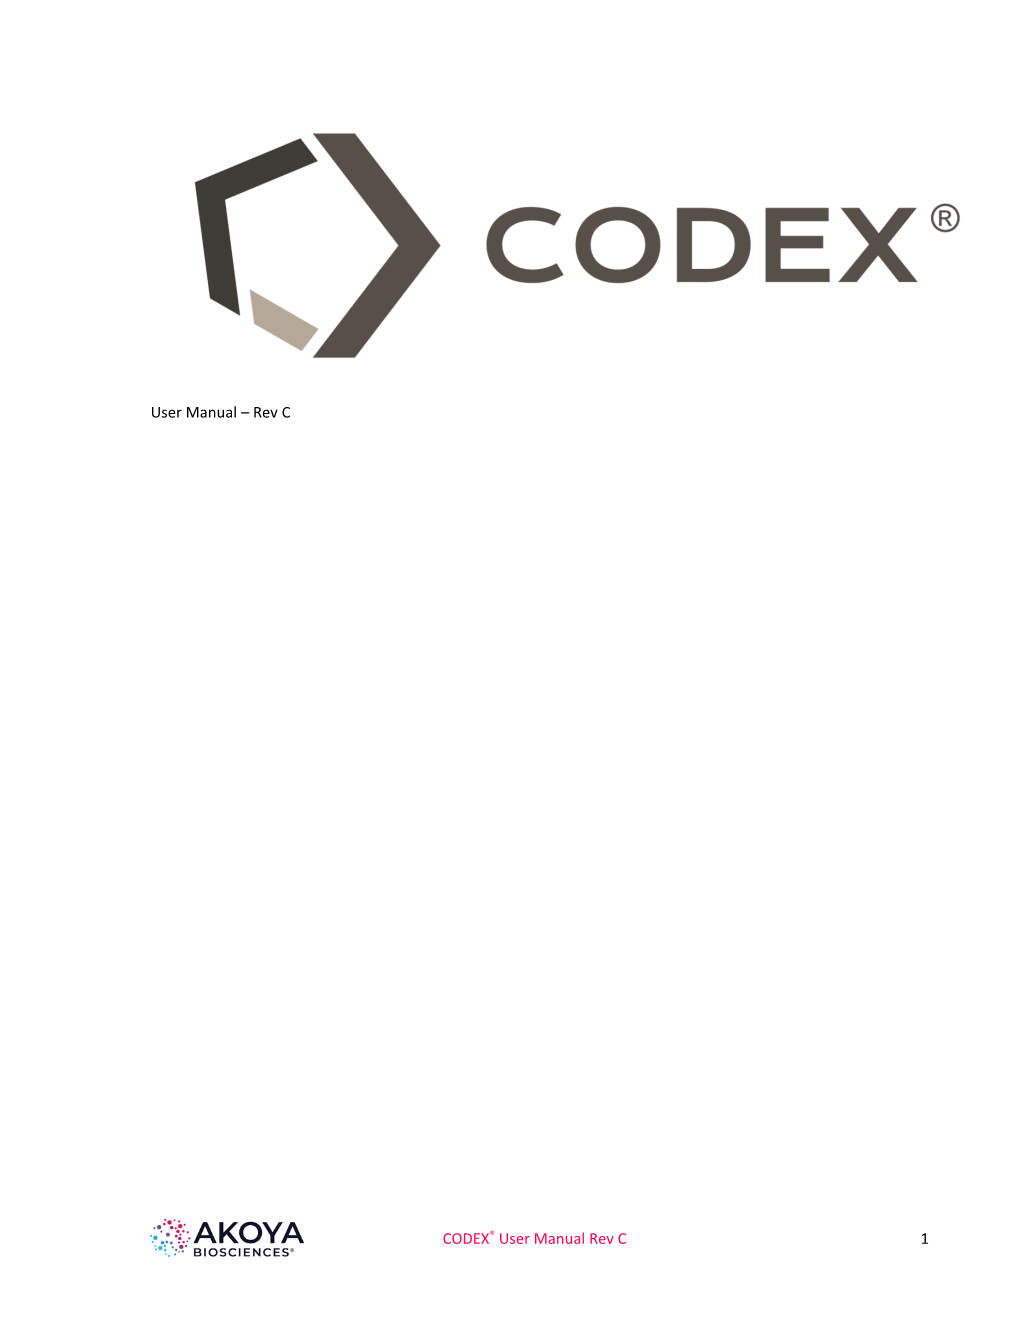 CODEX User Manual